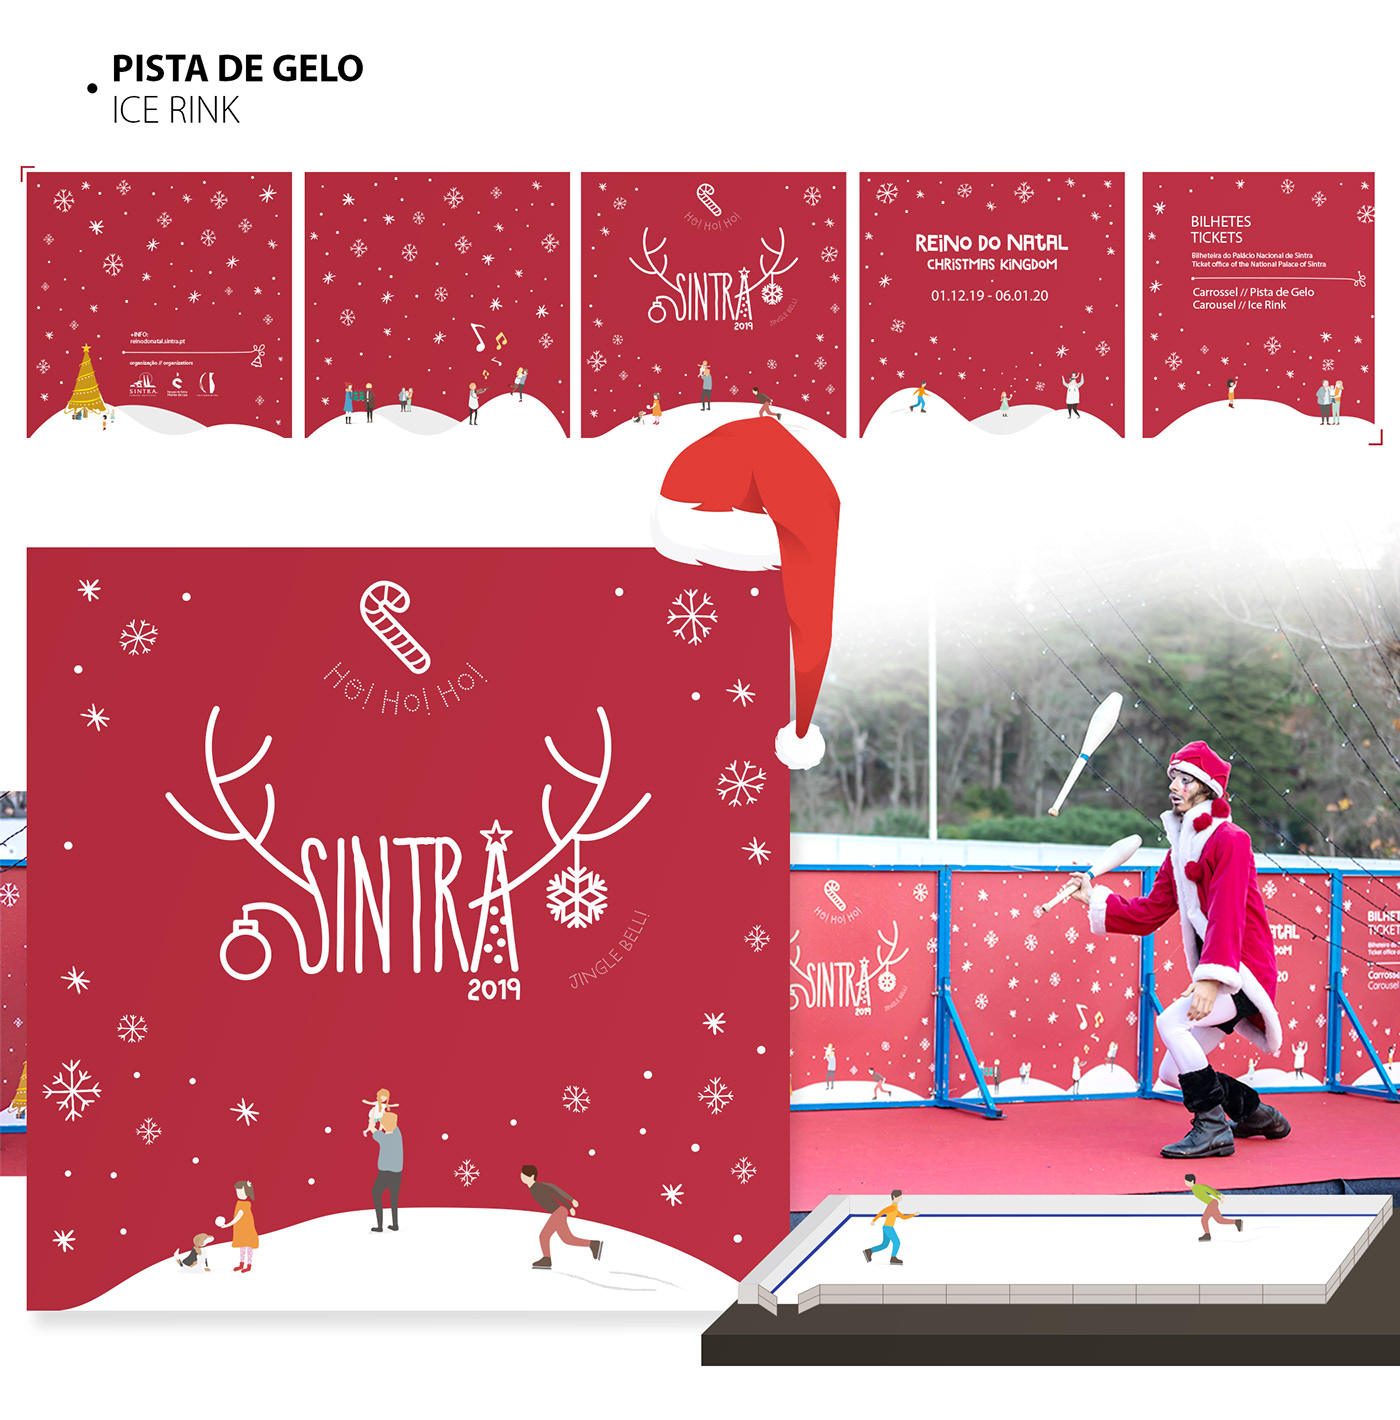 Ice Rink Ice Skates information Nacional Palace Pista de Gelo price list PSML Reino do Natal sintra tickets